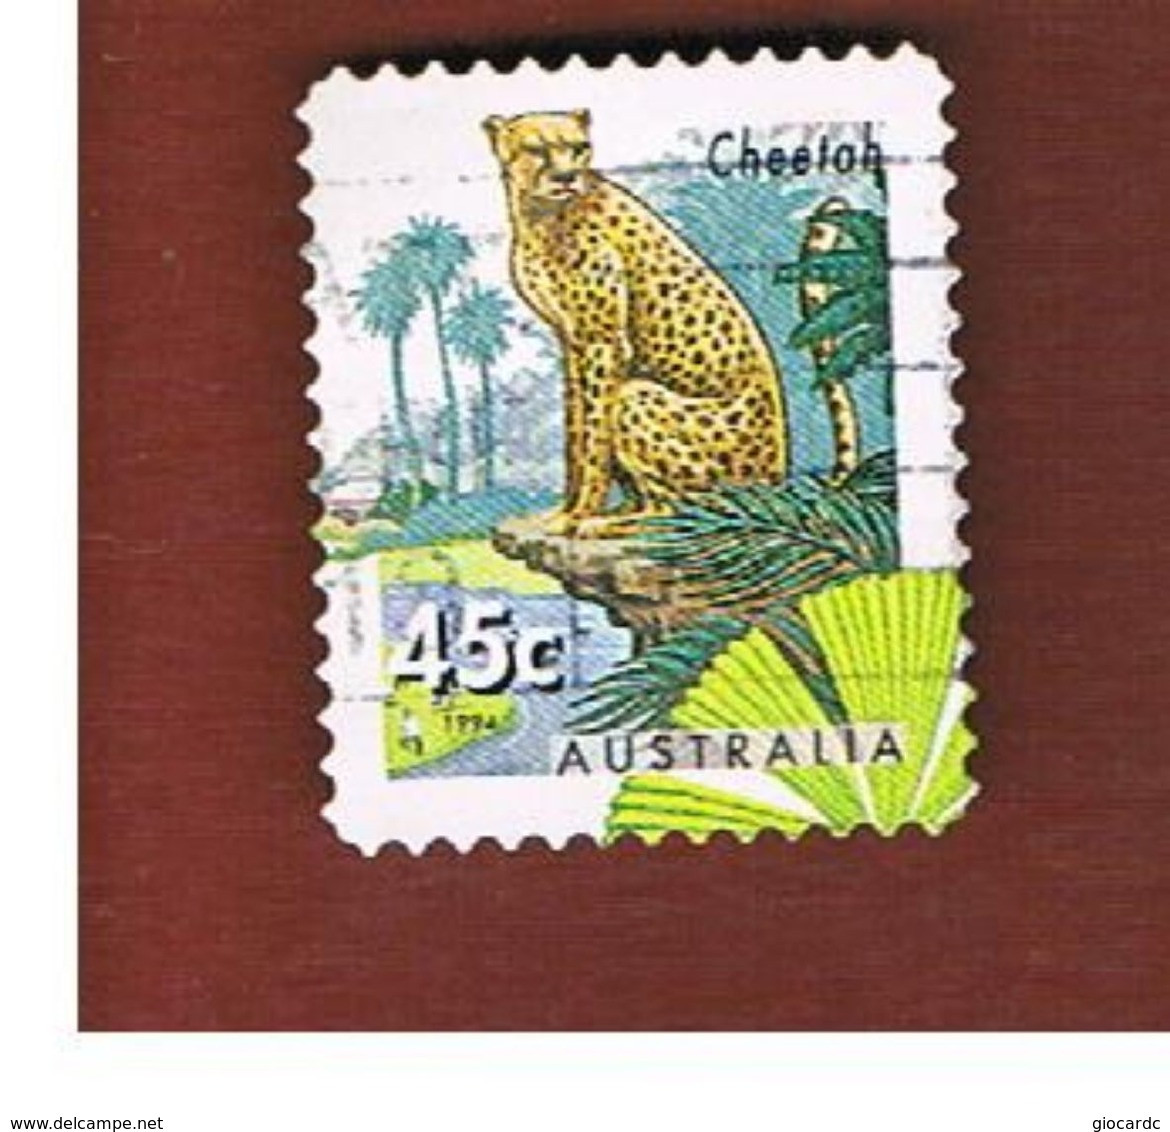 AUSTRALIA  -  SG 1486  -      1994  ANIMALS: CHEETAH   -       USED - Used Stamps